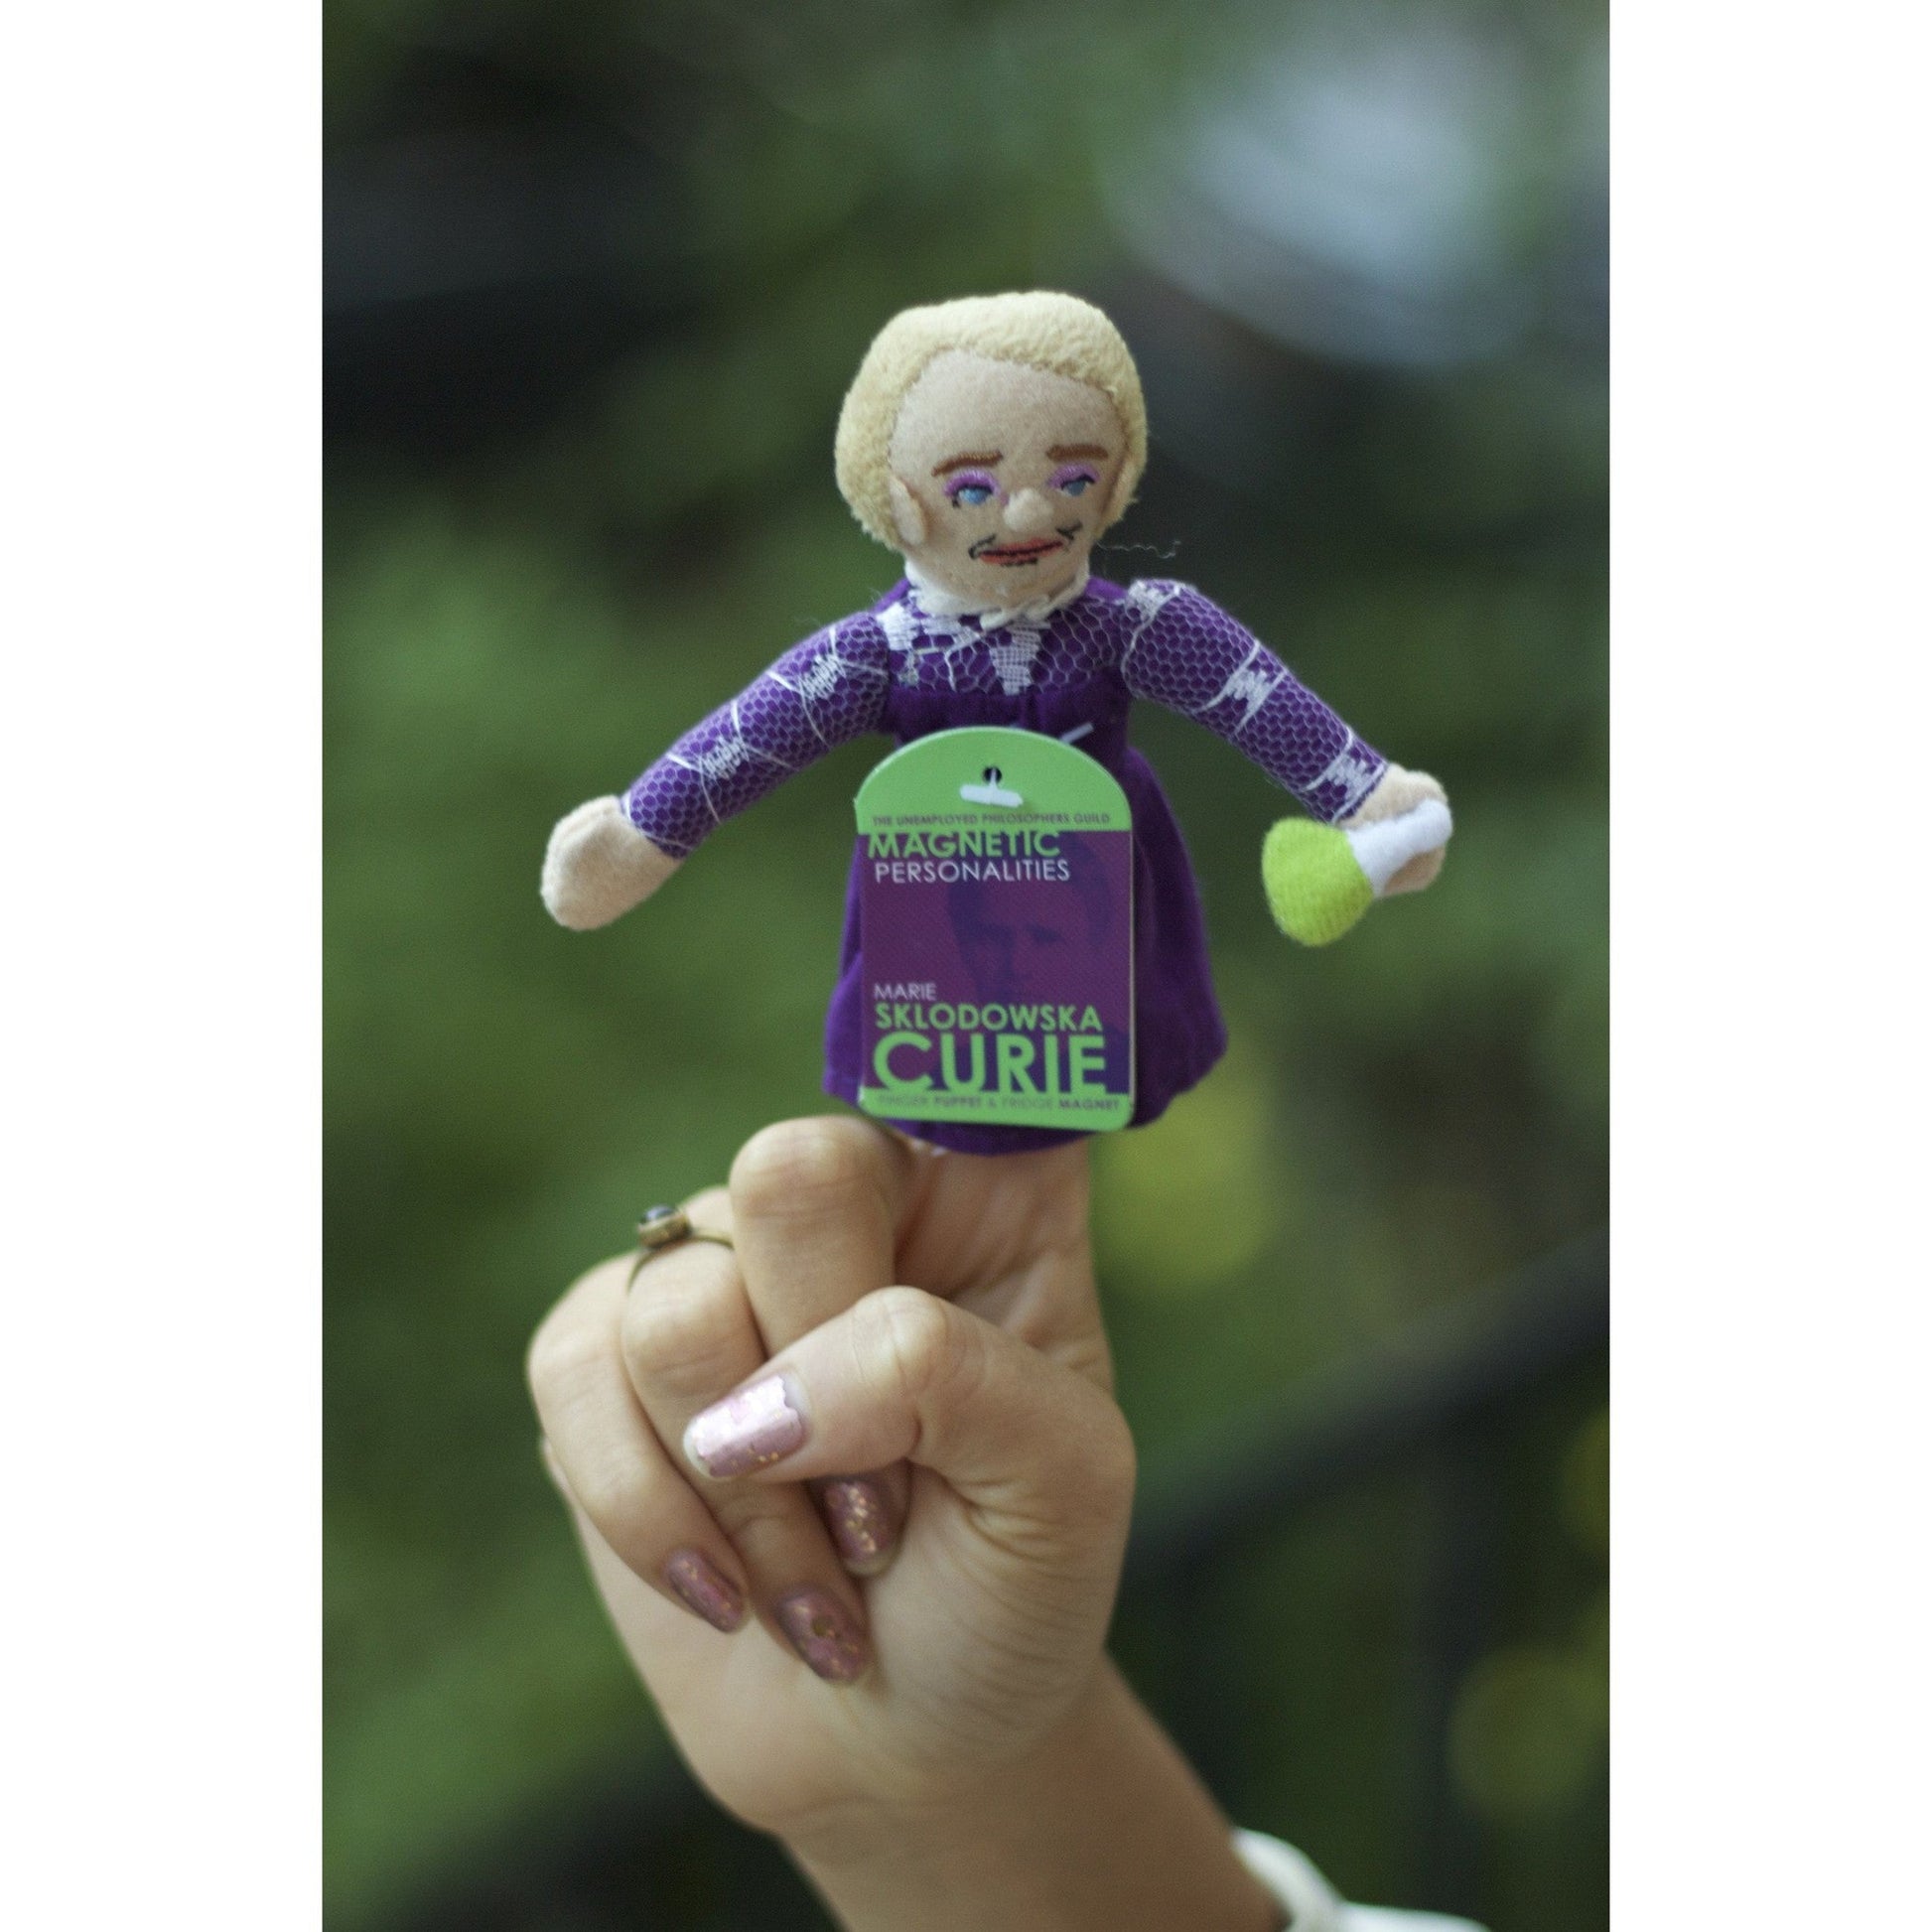 Marie Skłodowska-Curie Refrigerator Magnet and Finger Puppet Mini Doll